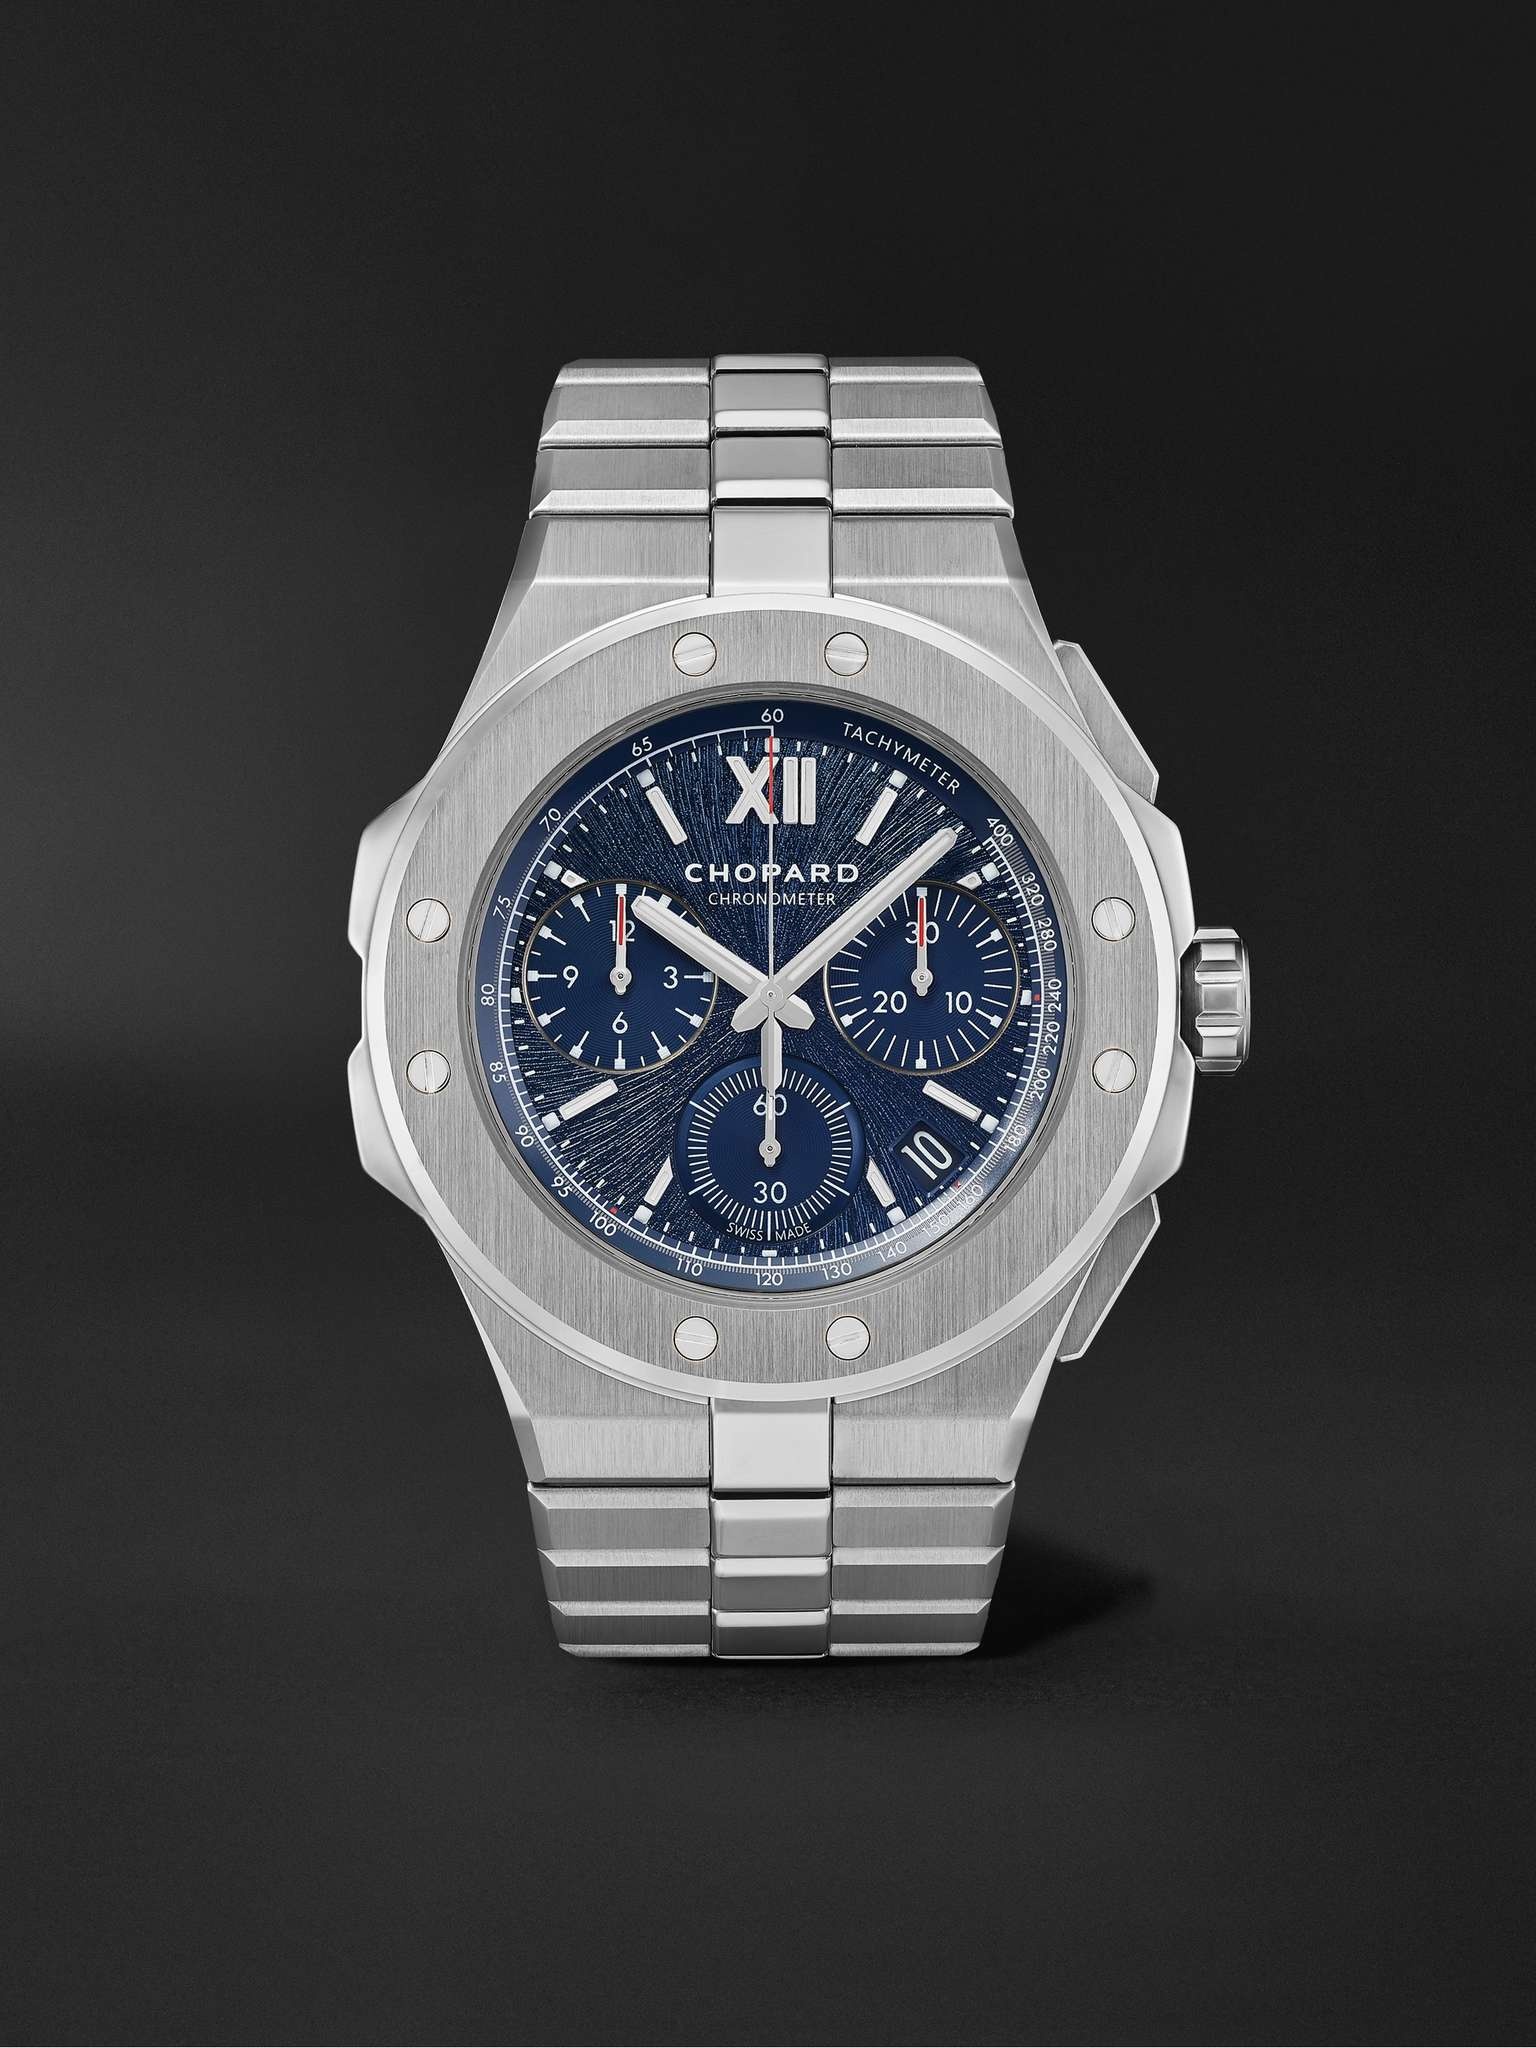 Alpine Eagle XL Chrono Automatic 44mm Lucent Steel Watch, Ref. No. 298609-3001 - 1